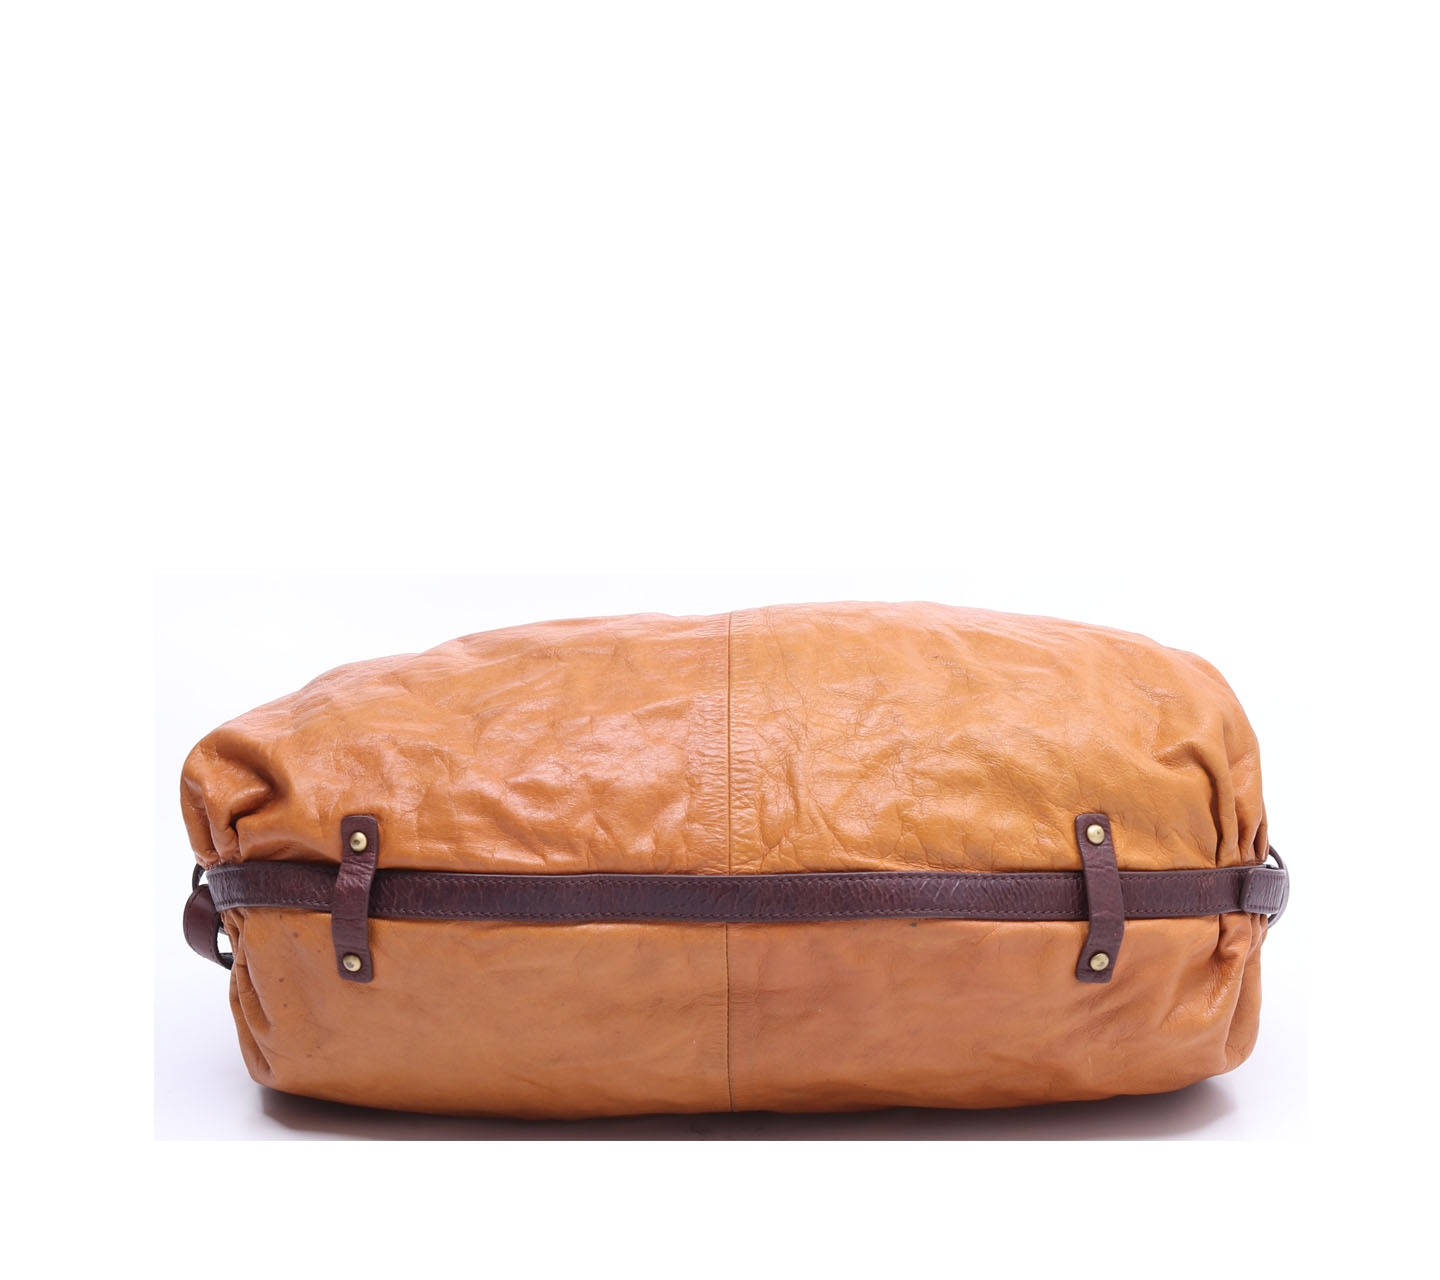 Enzo angiolini Dark Brown & Mustard Handbag